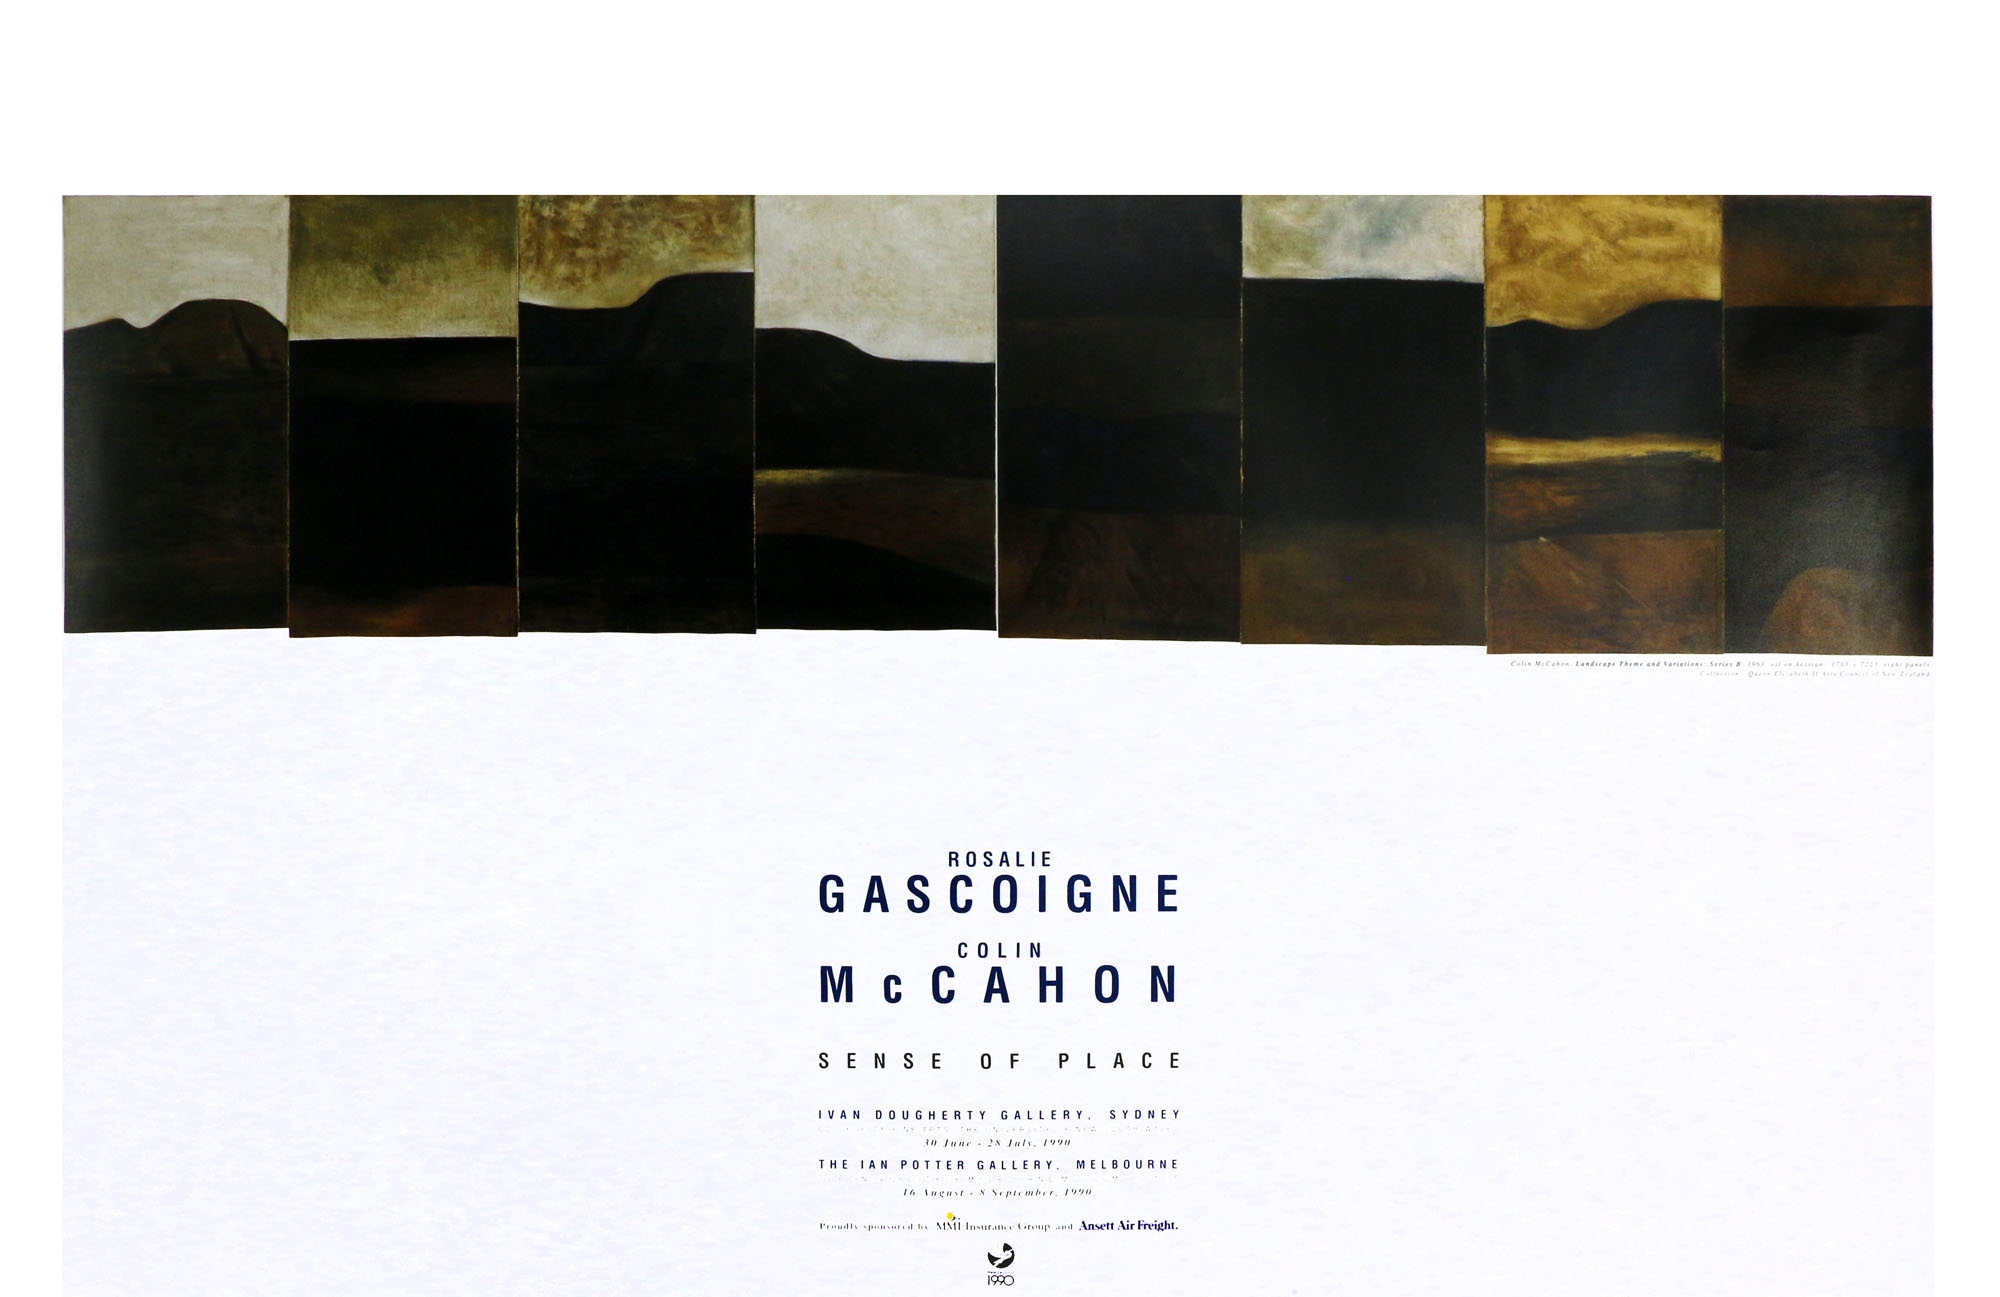 Rosalie Gascoigne, Colin McCahon - Sense of Place - Rosalie Gascoigne